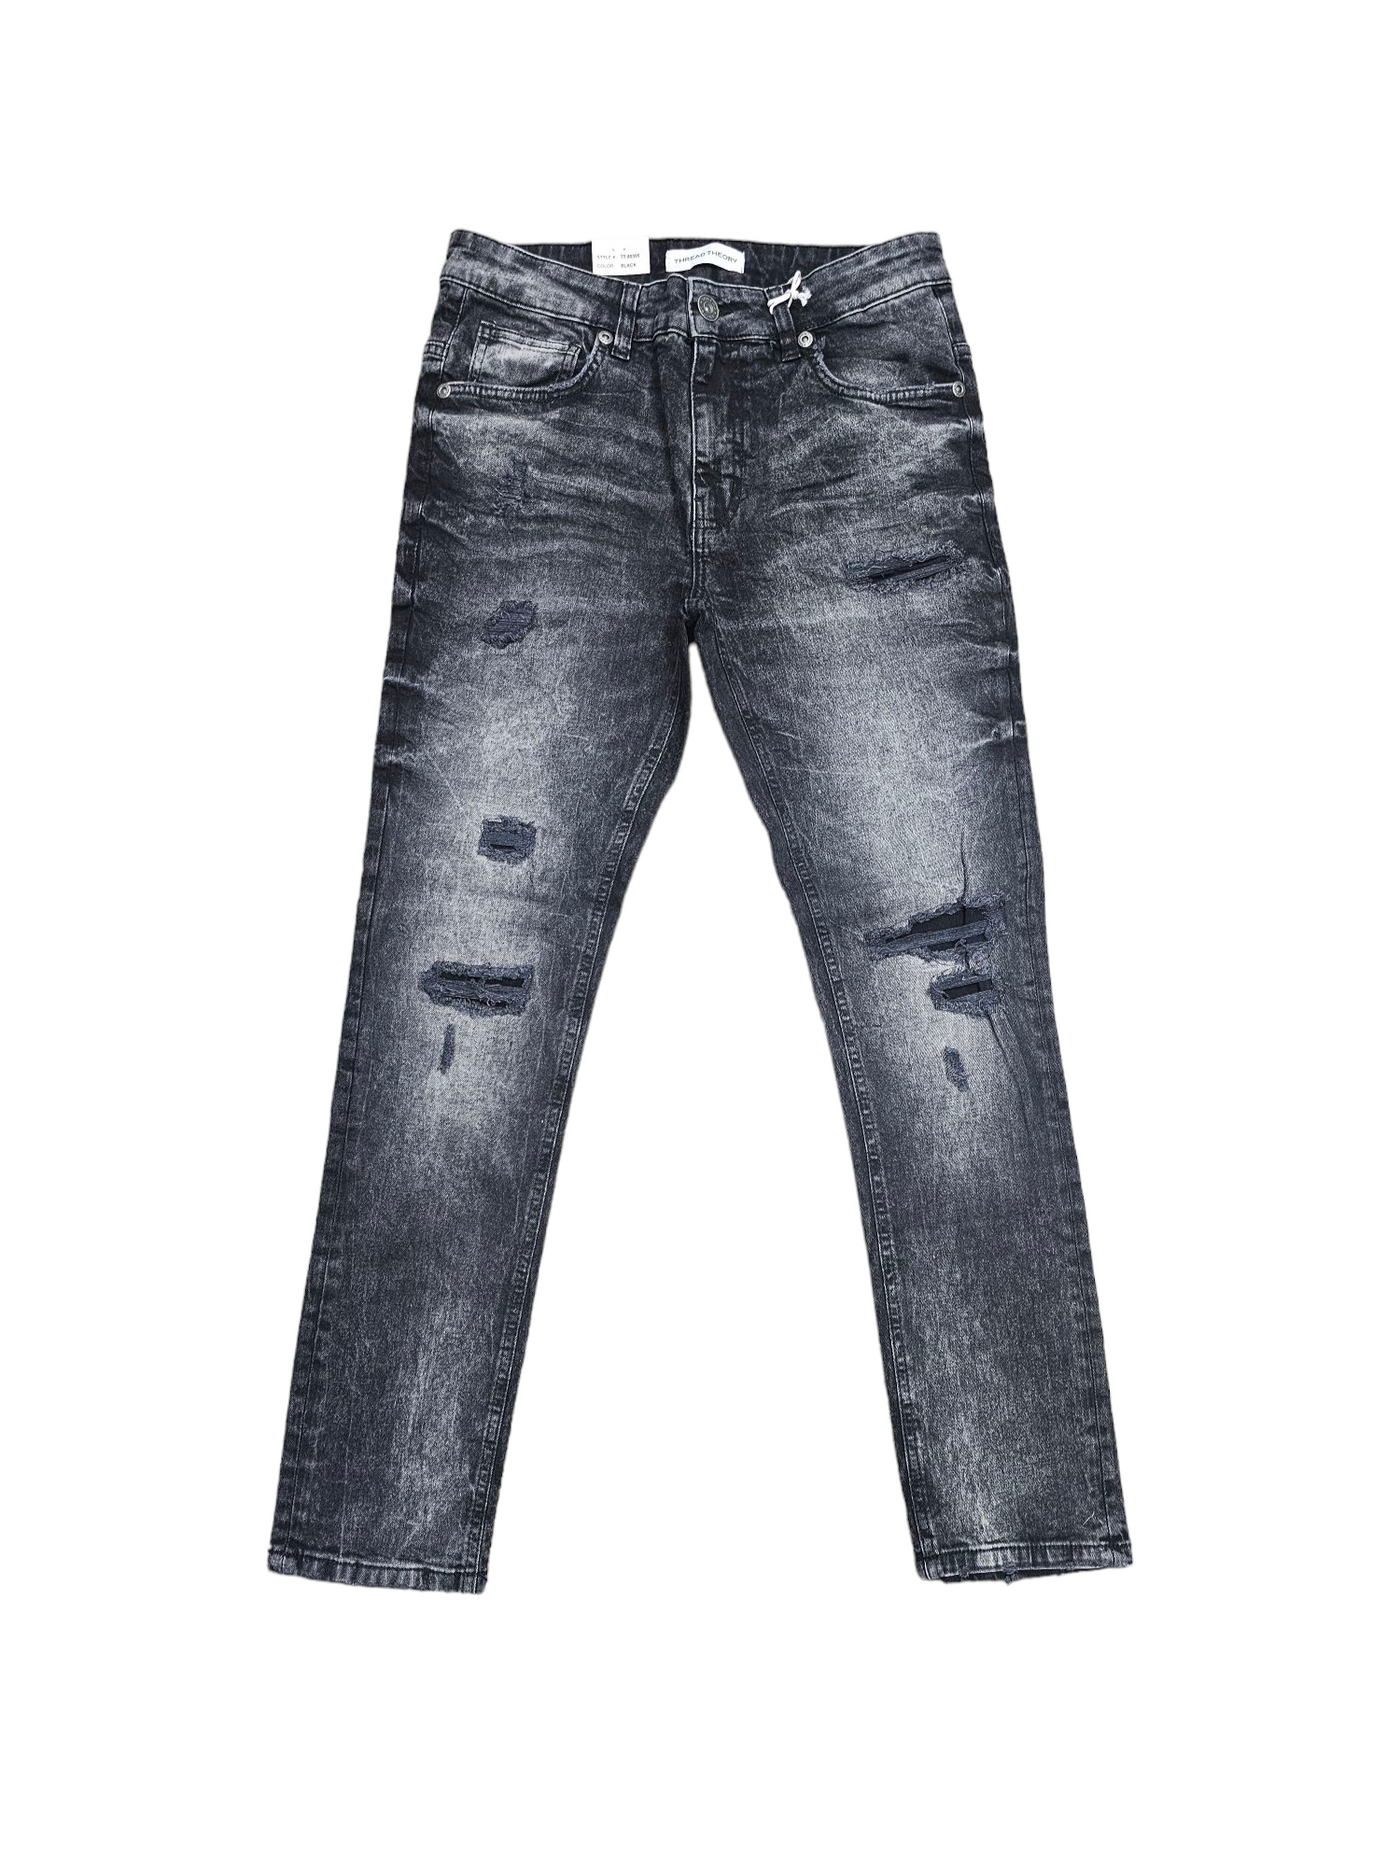 Thread Theory Men's Denim Jeans Black 80305